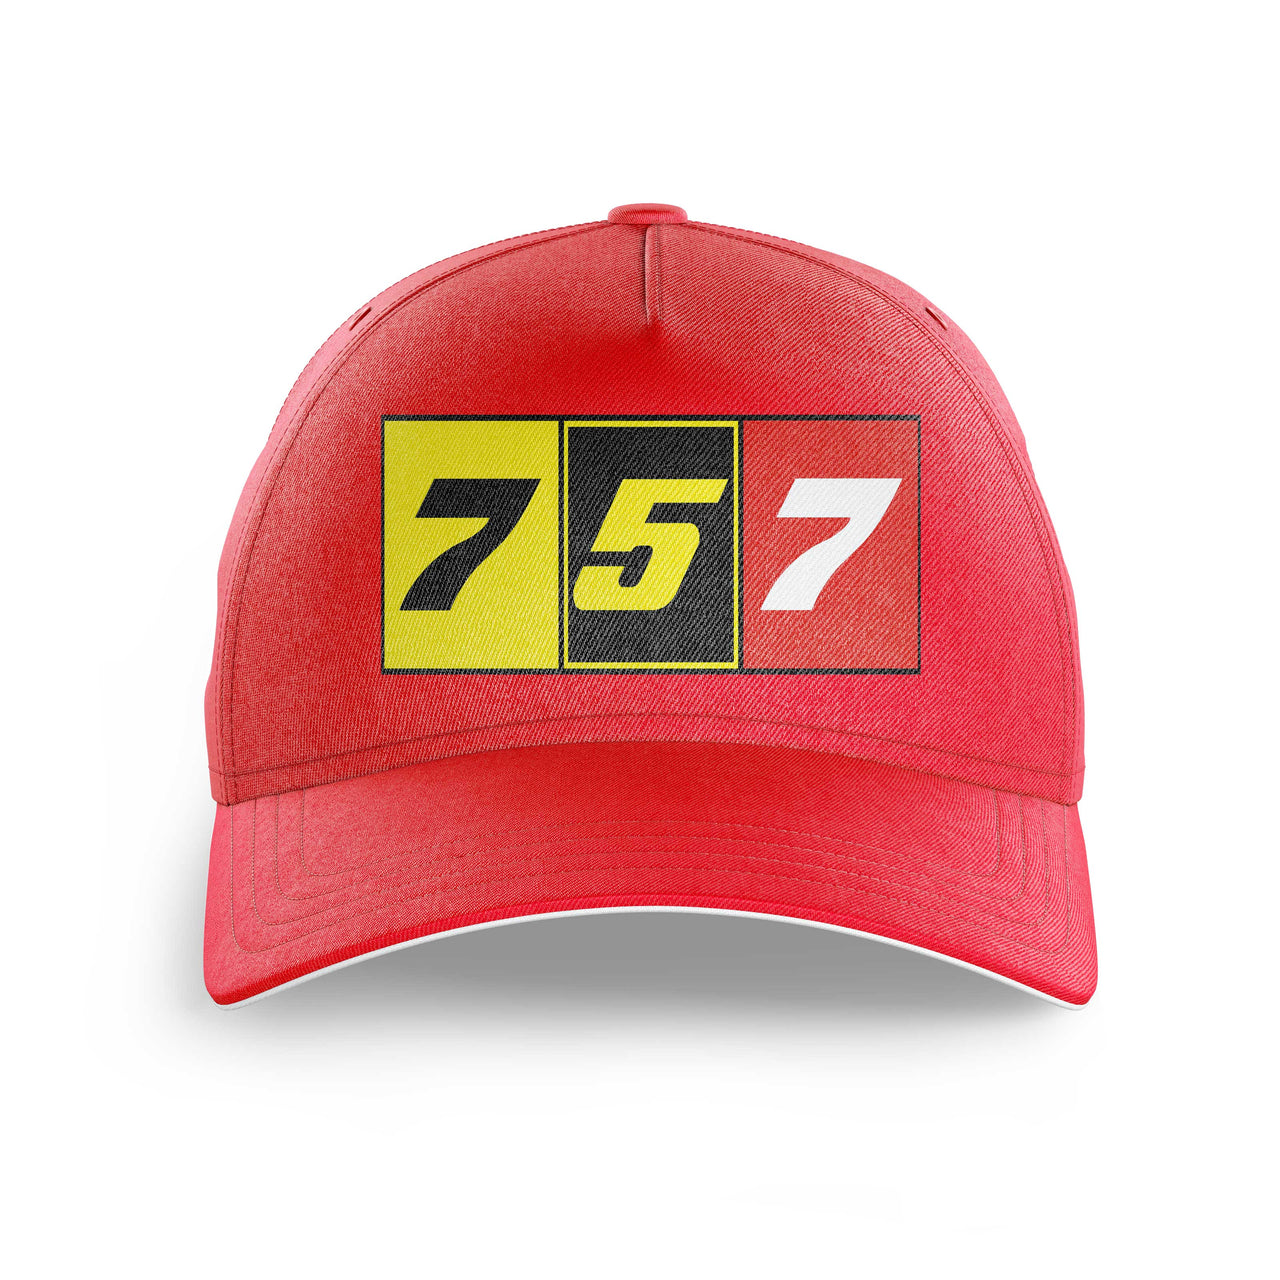 Flat Colourful 757 Printed Hats